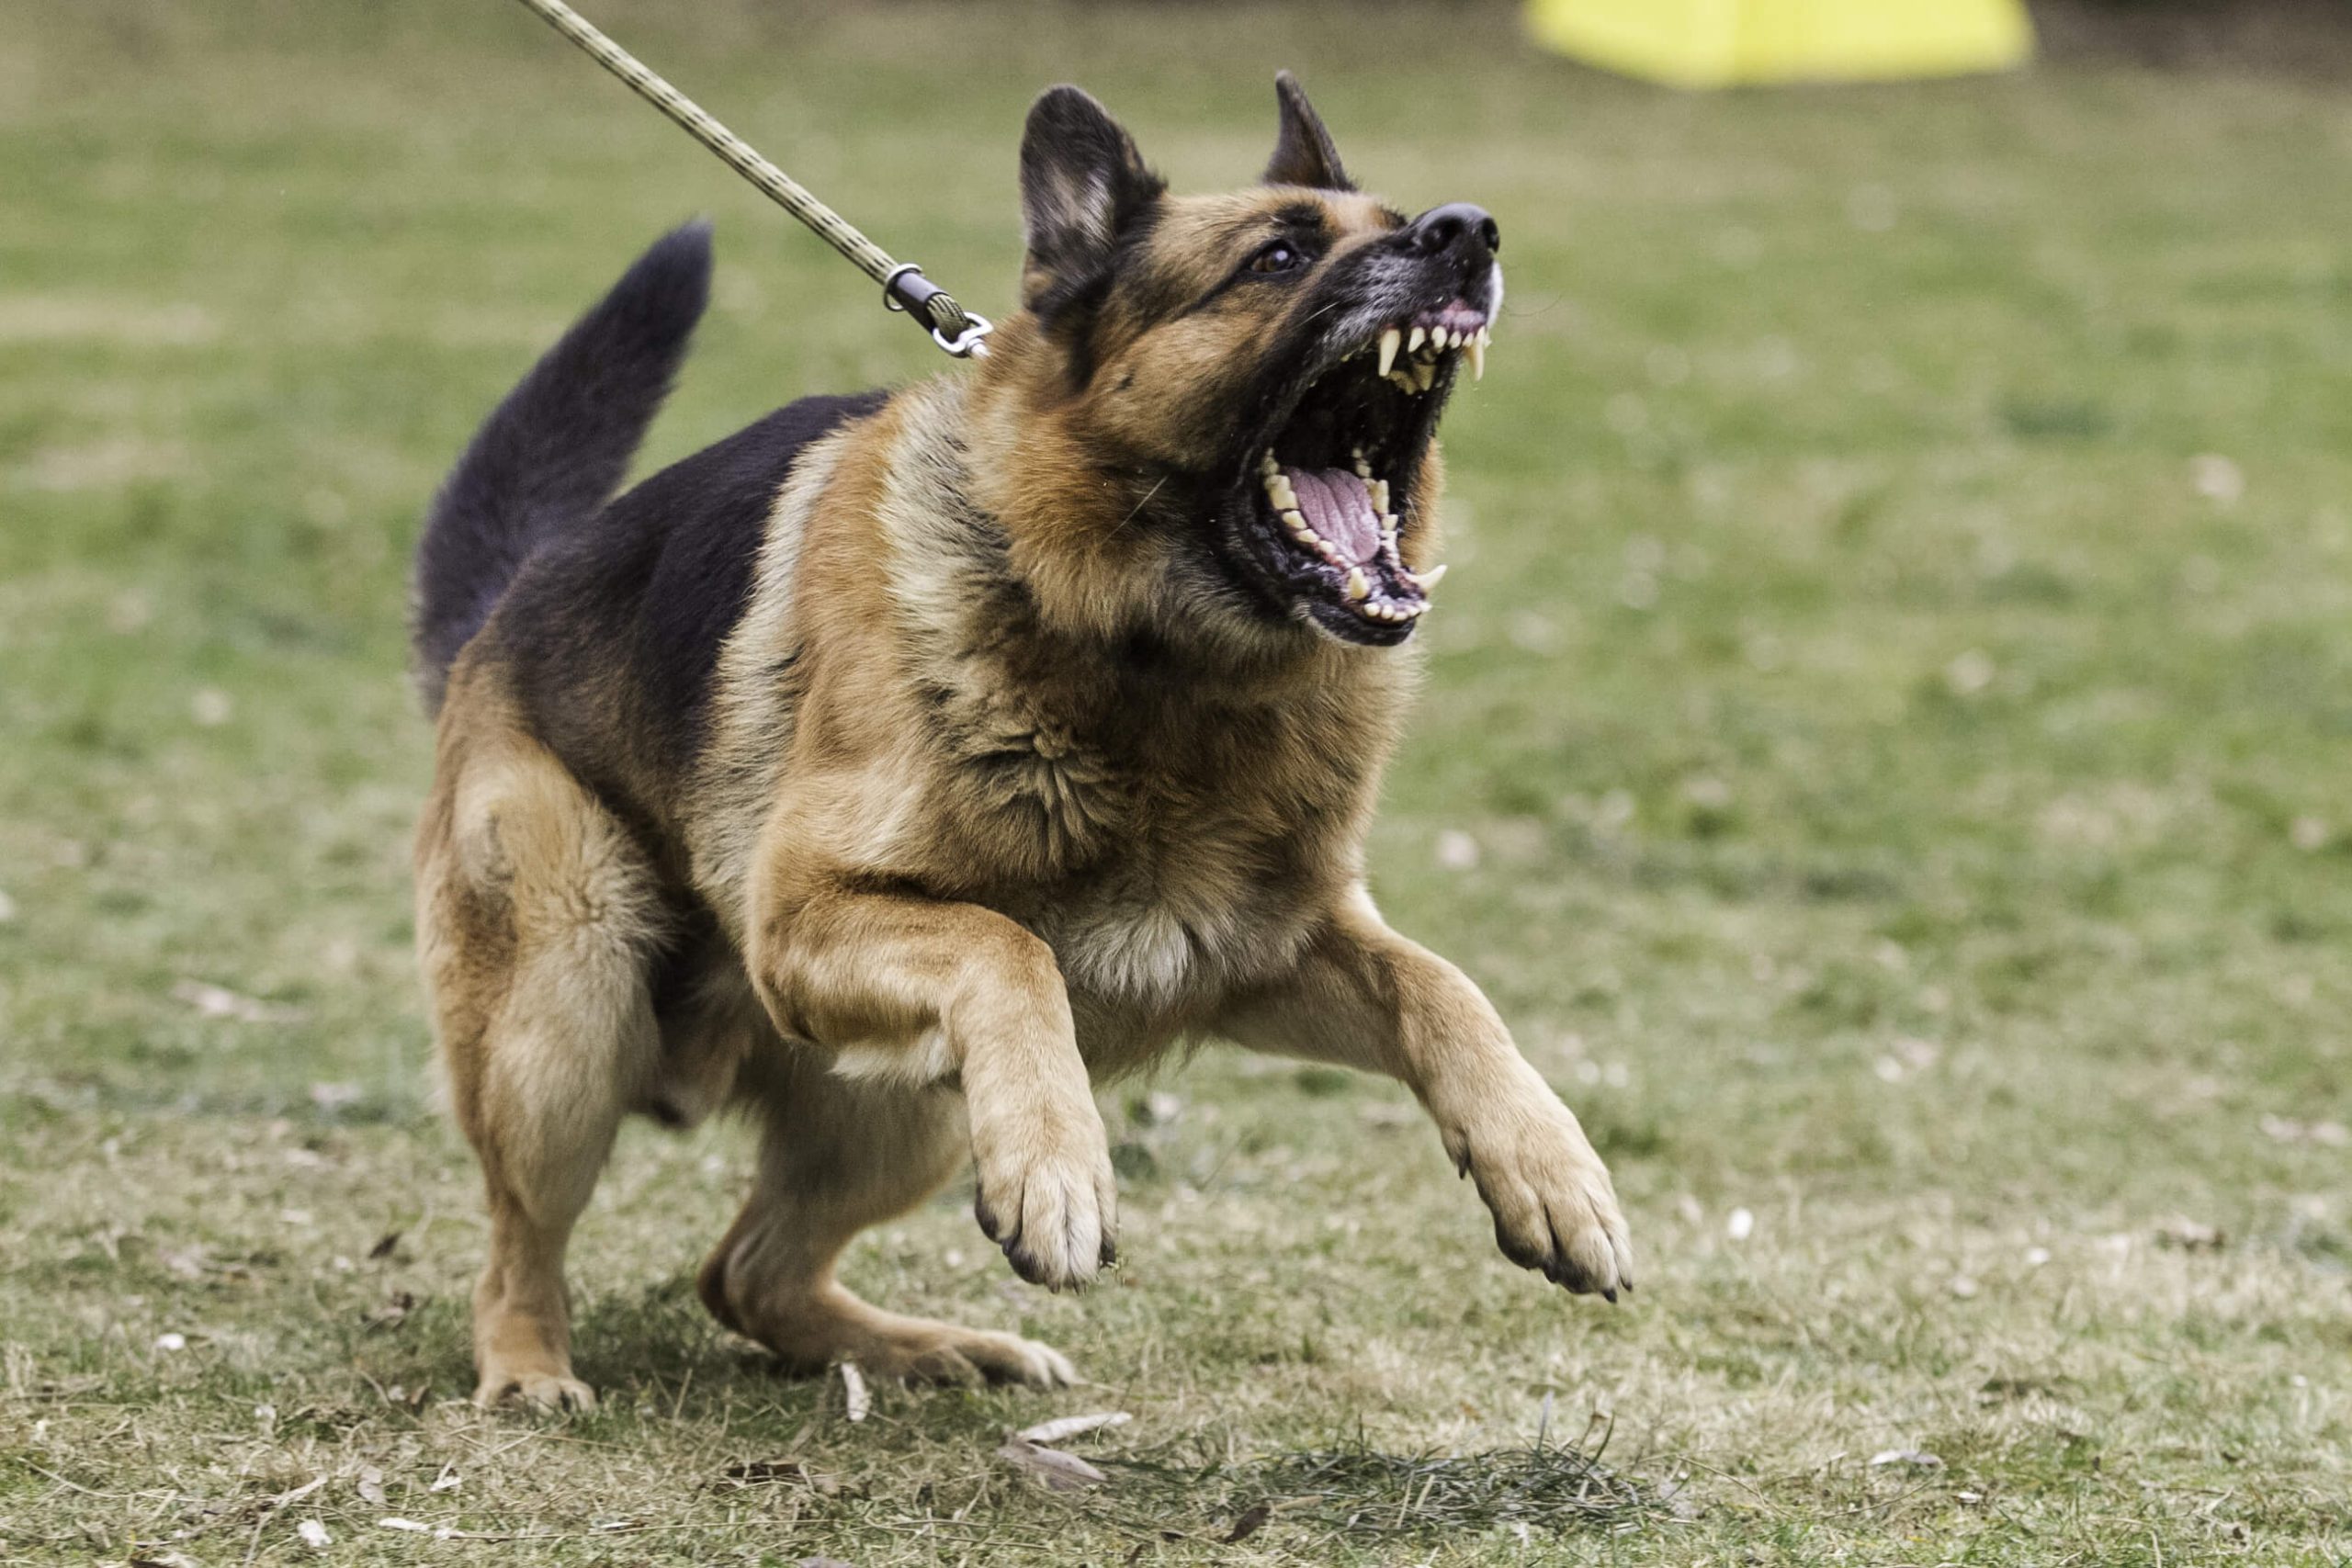 How to Train an Aggressive Dog?